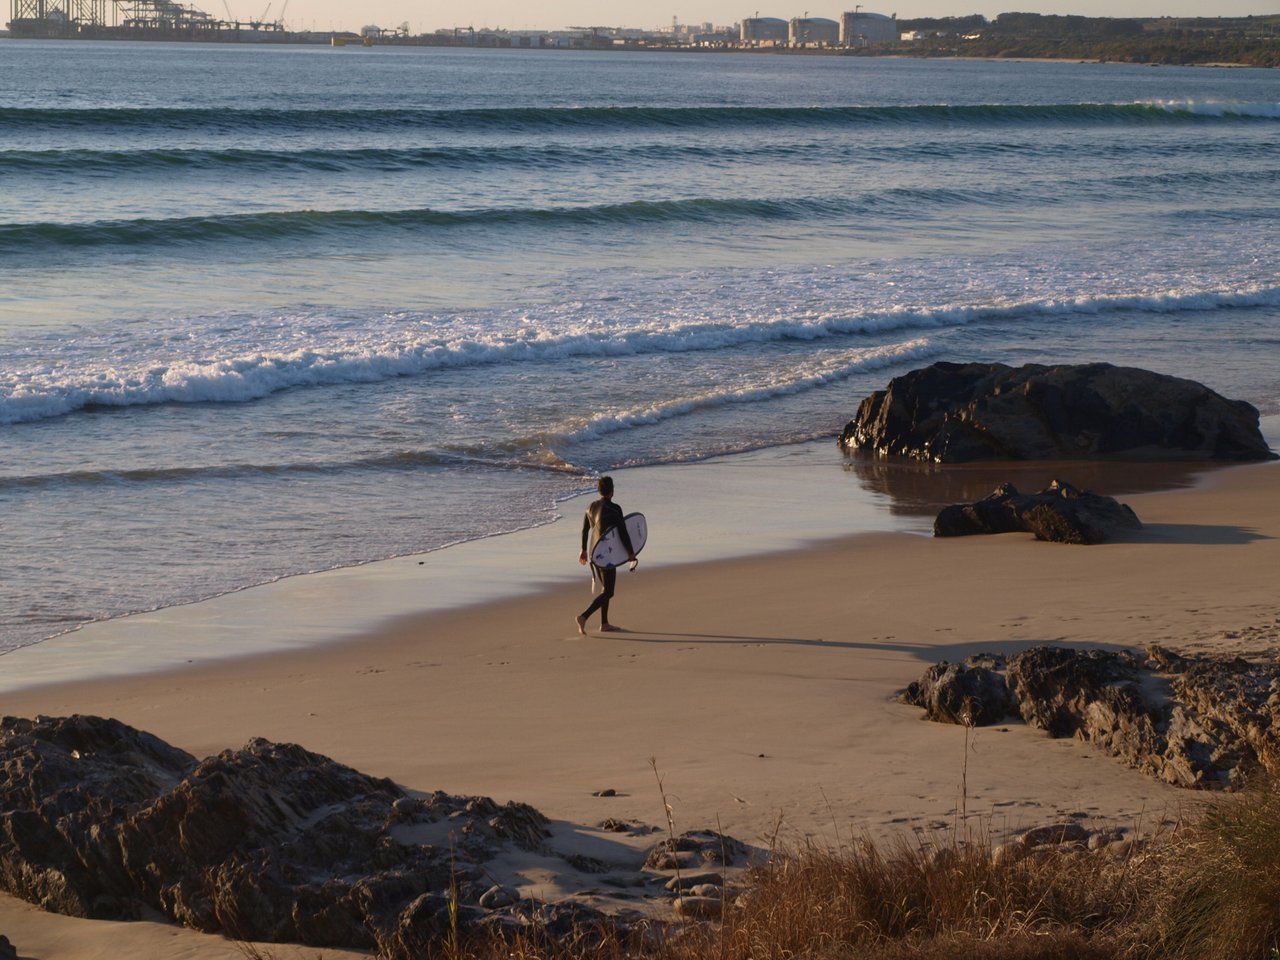 Portugal's Surf winter trip